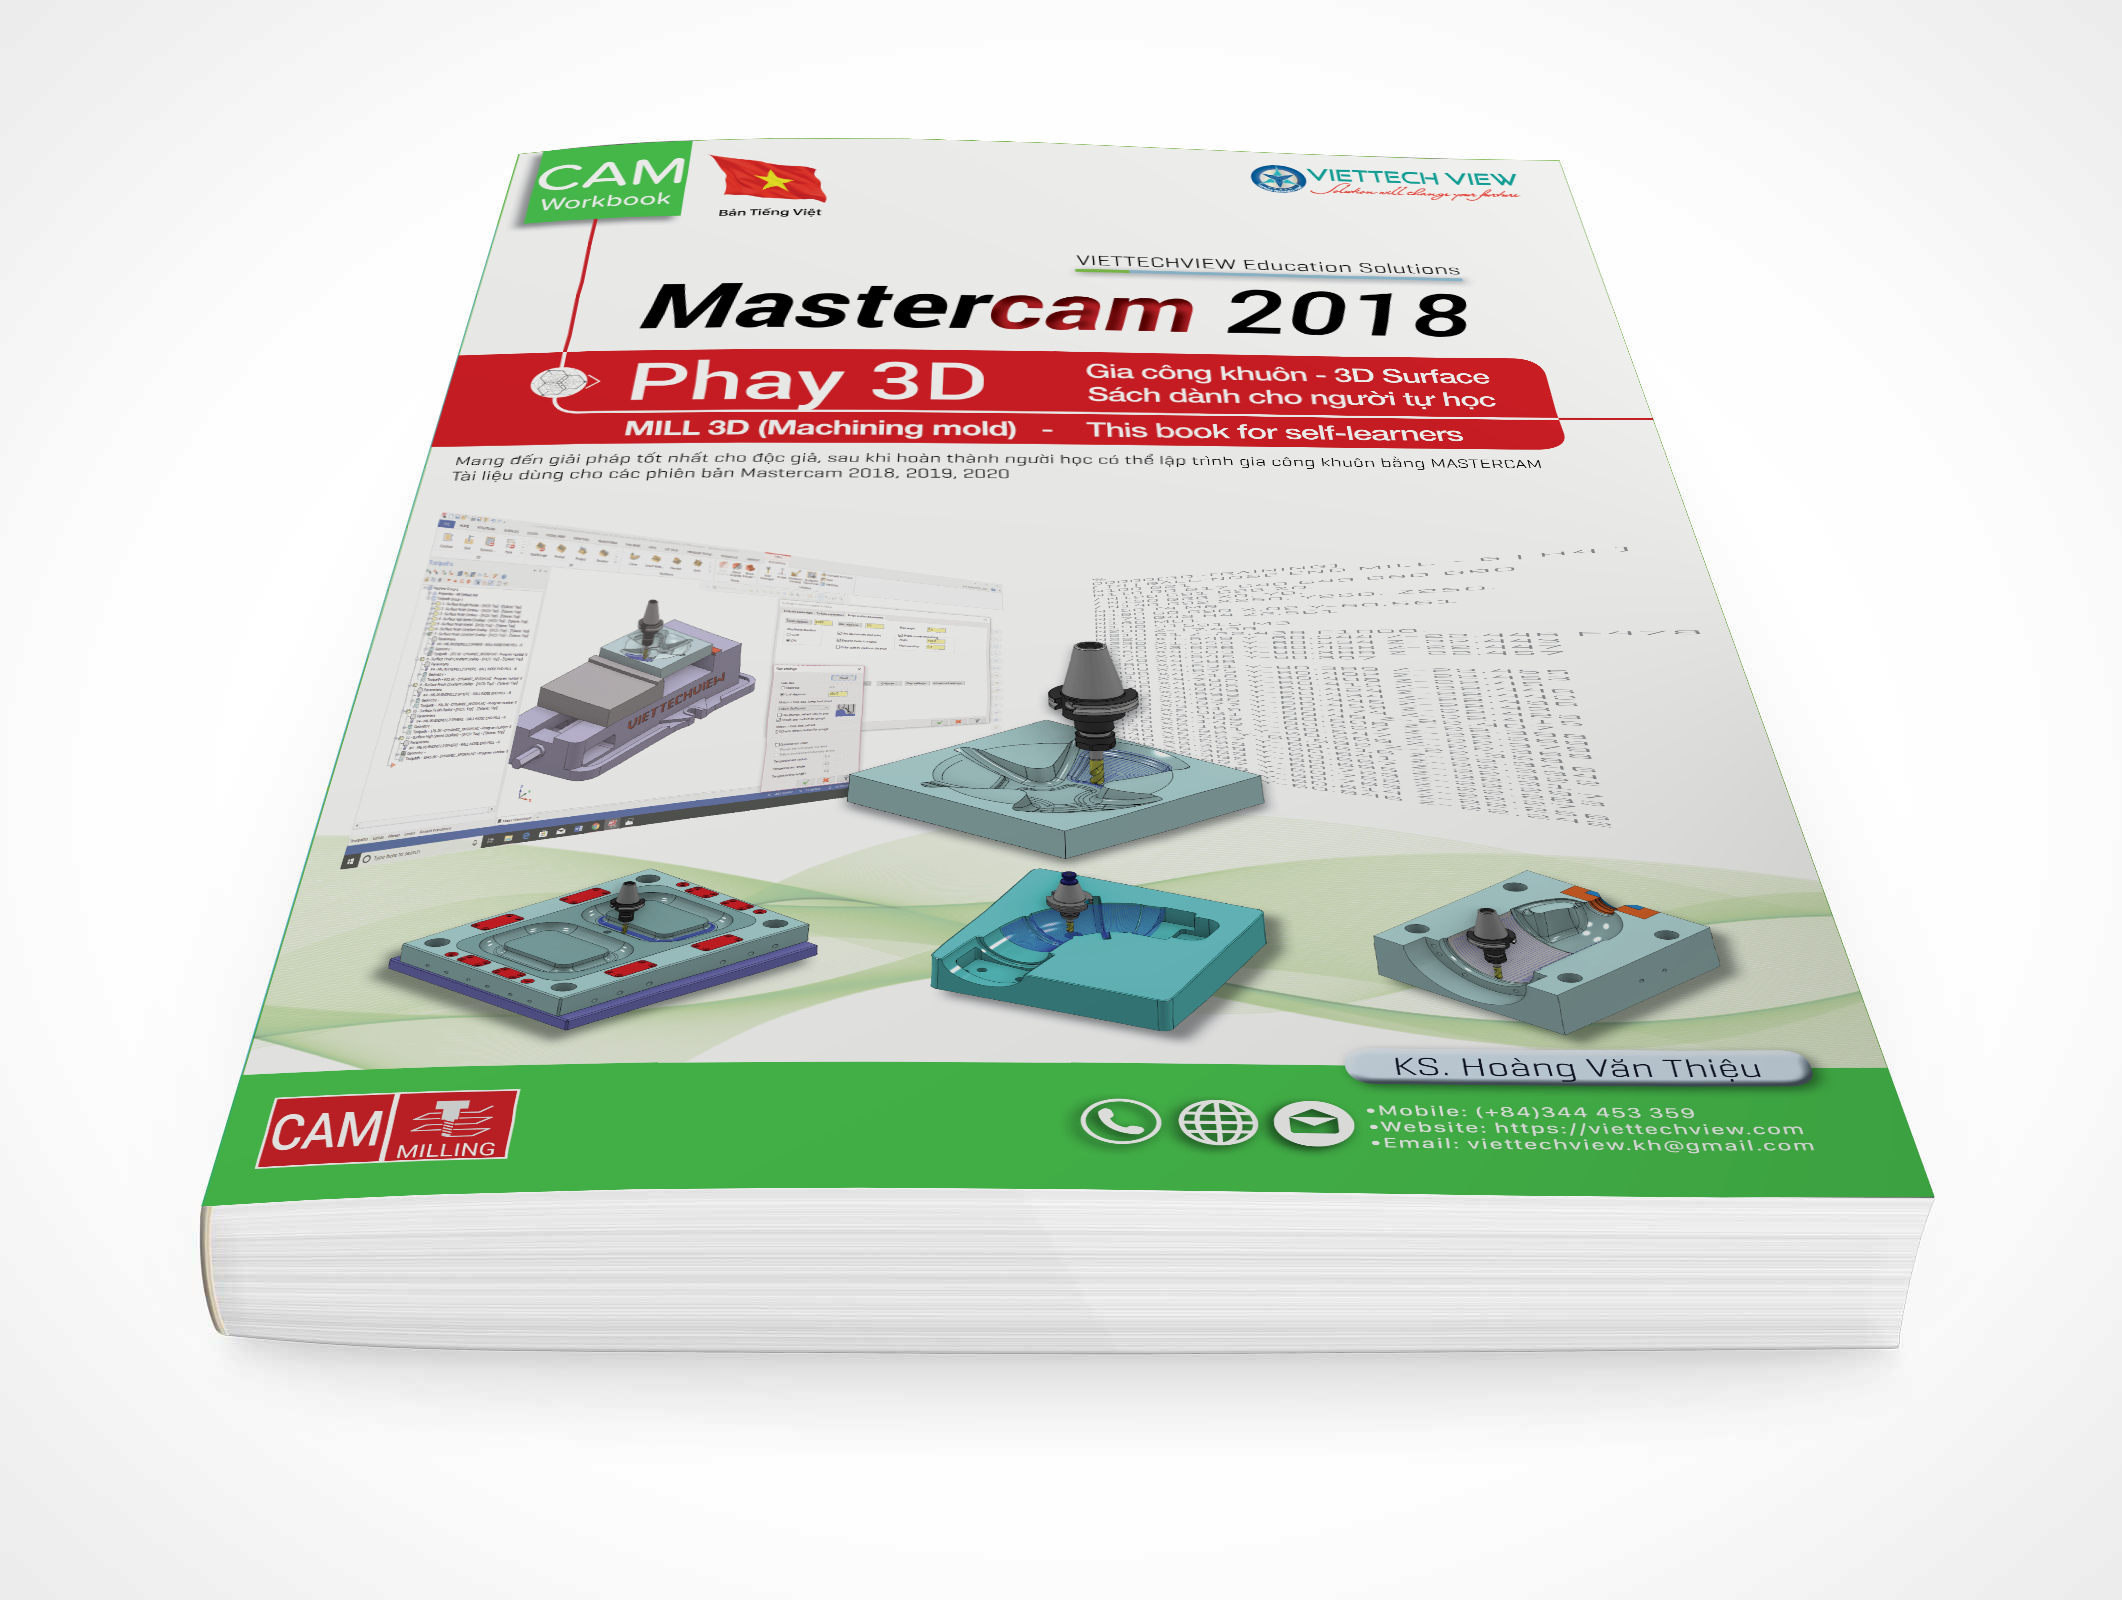 Mastercam-Phay 3D_3D1_-13-03-2020-23-25-11.png